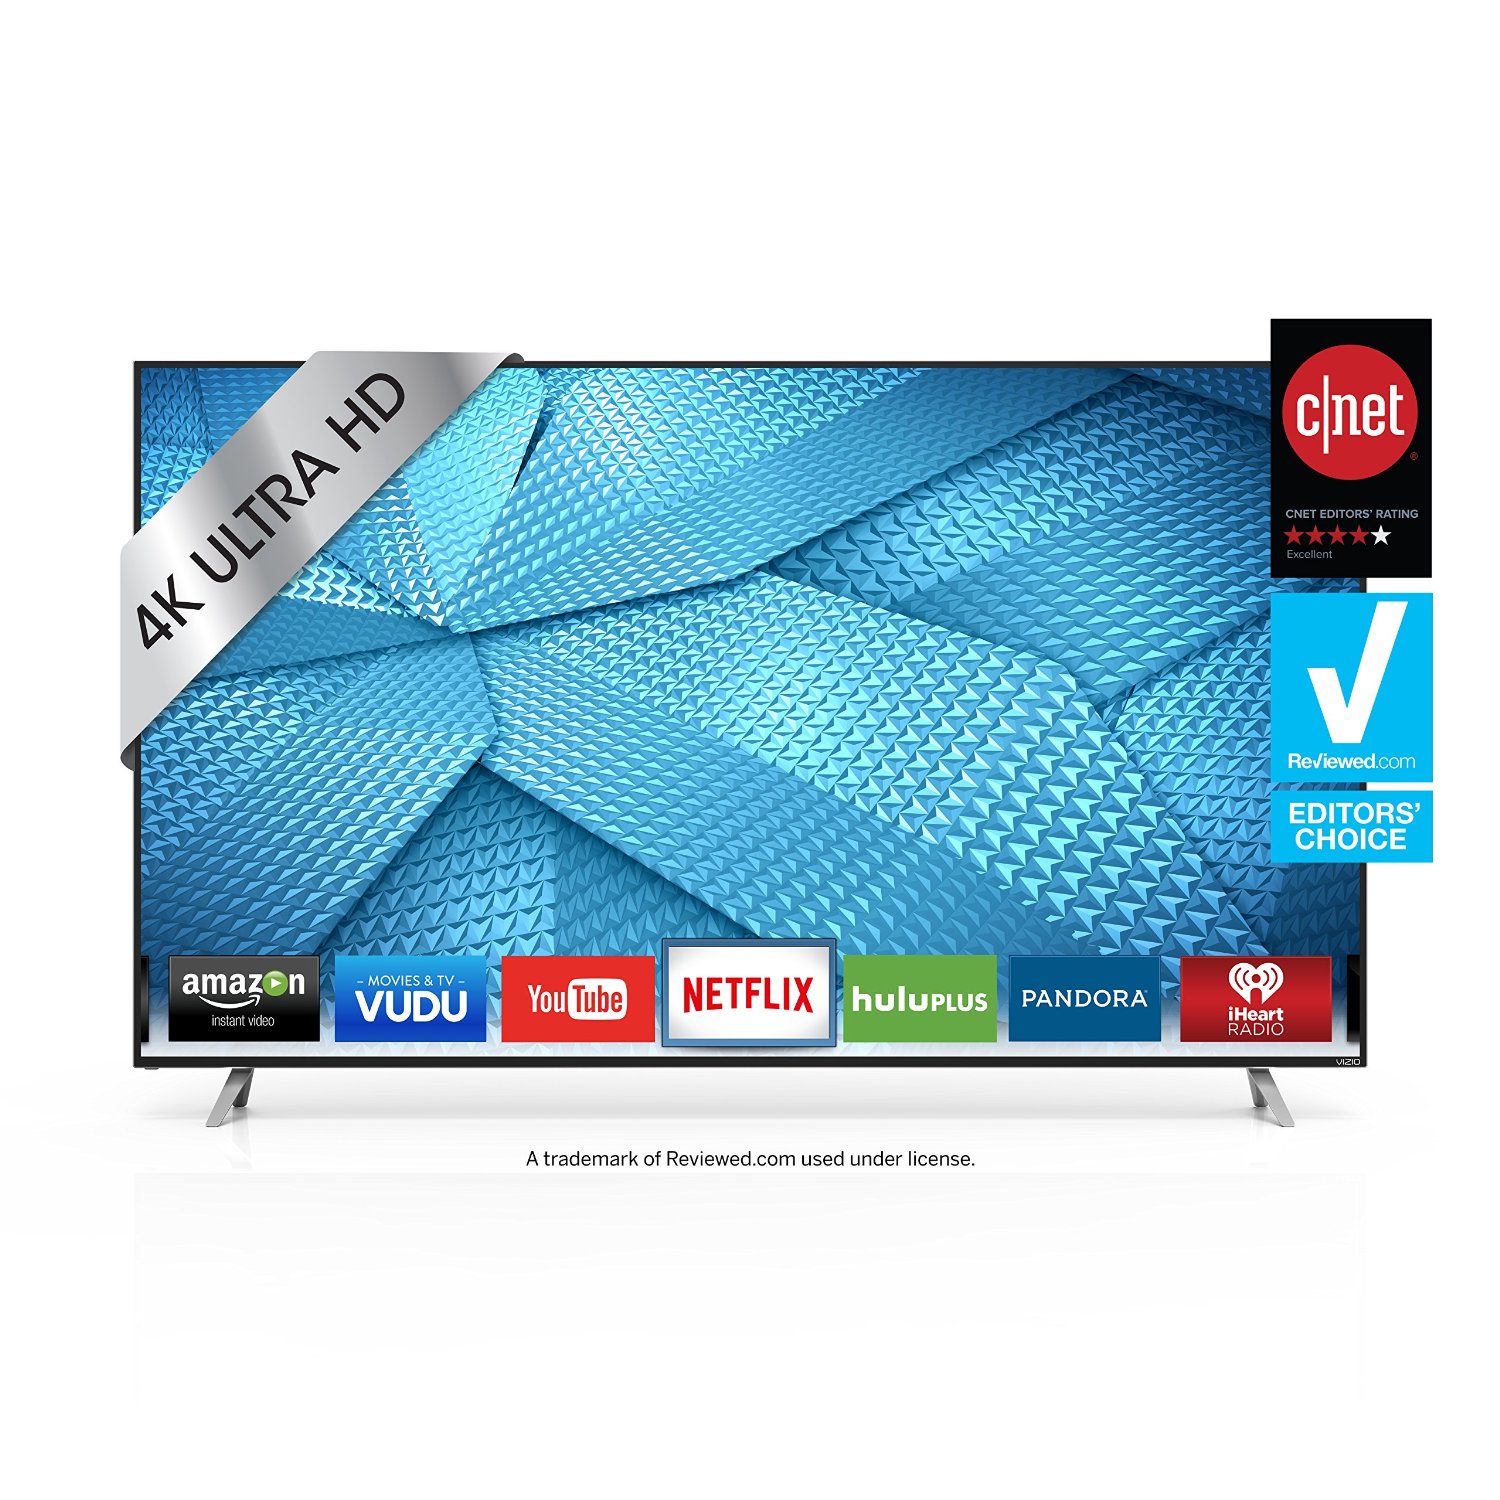 Black Friday Sales 2015: Amazon’s Best 4K TV Deals | Heavy.com - Is Vizio Having Any Black Friday Deals